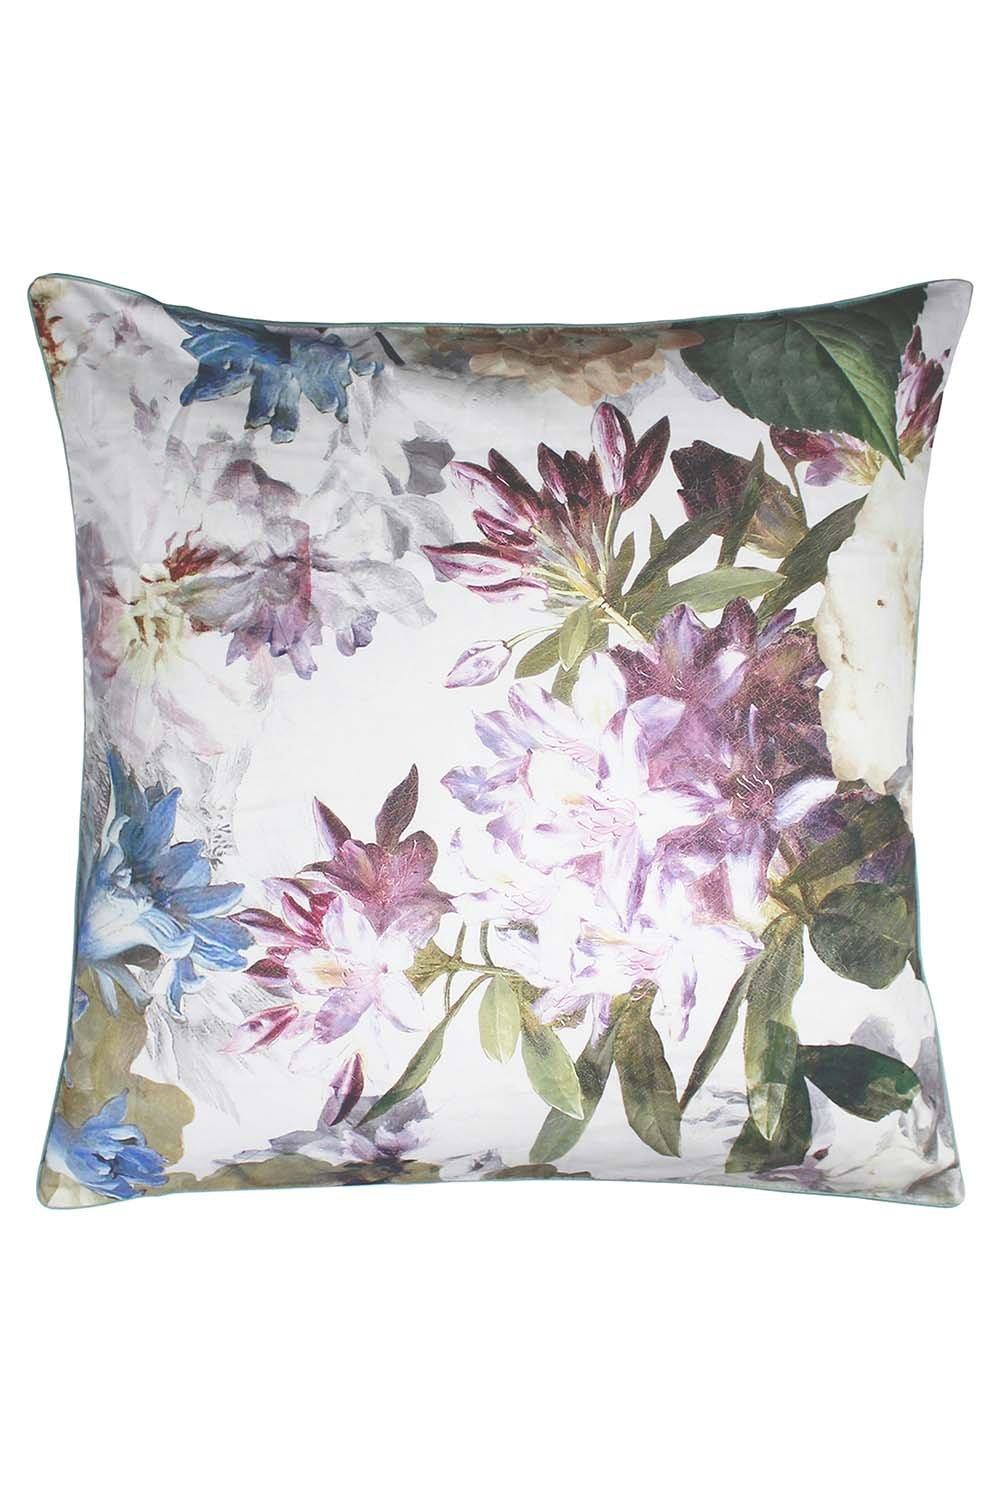 Linen House Lena Floral Pillowcase Sham